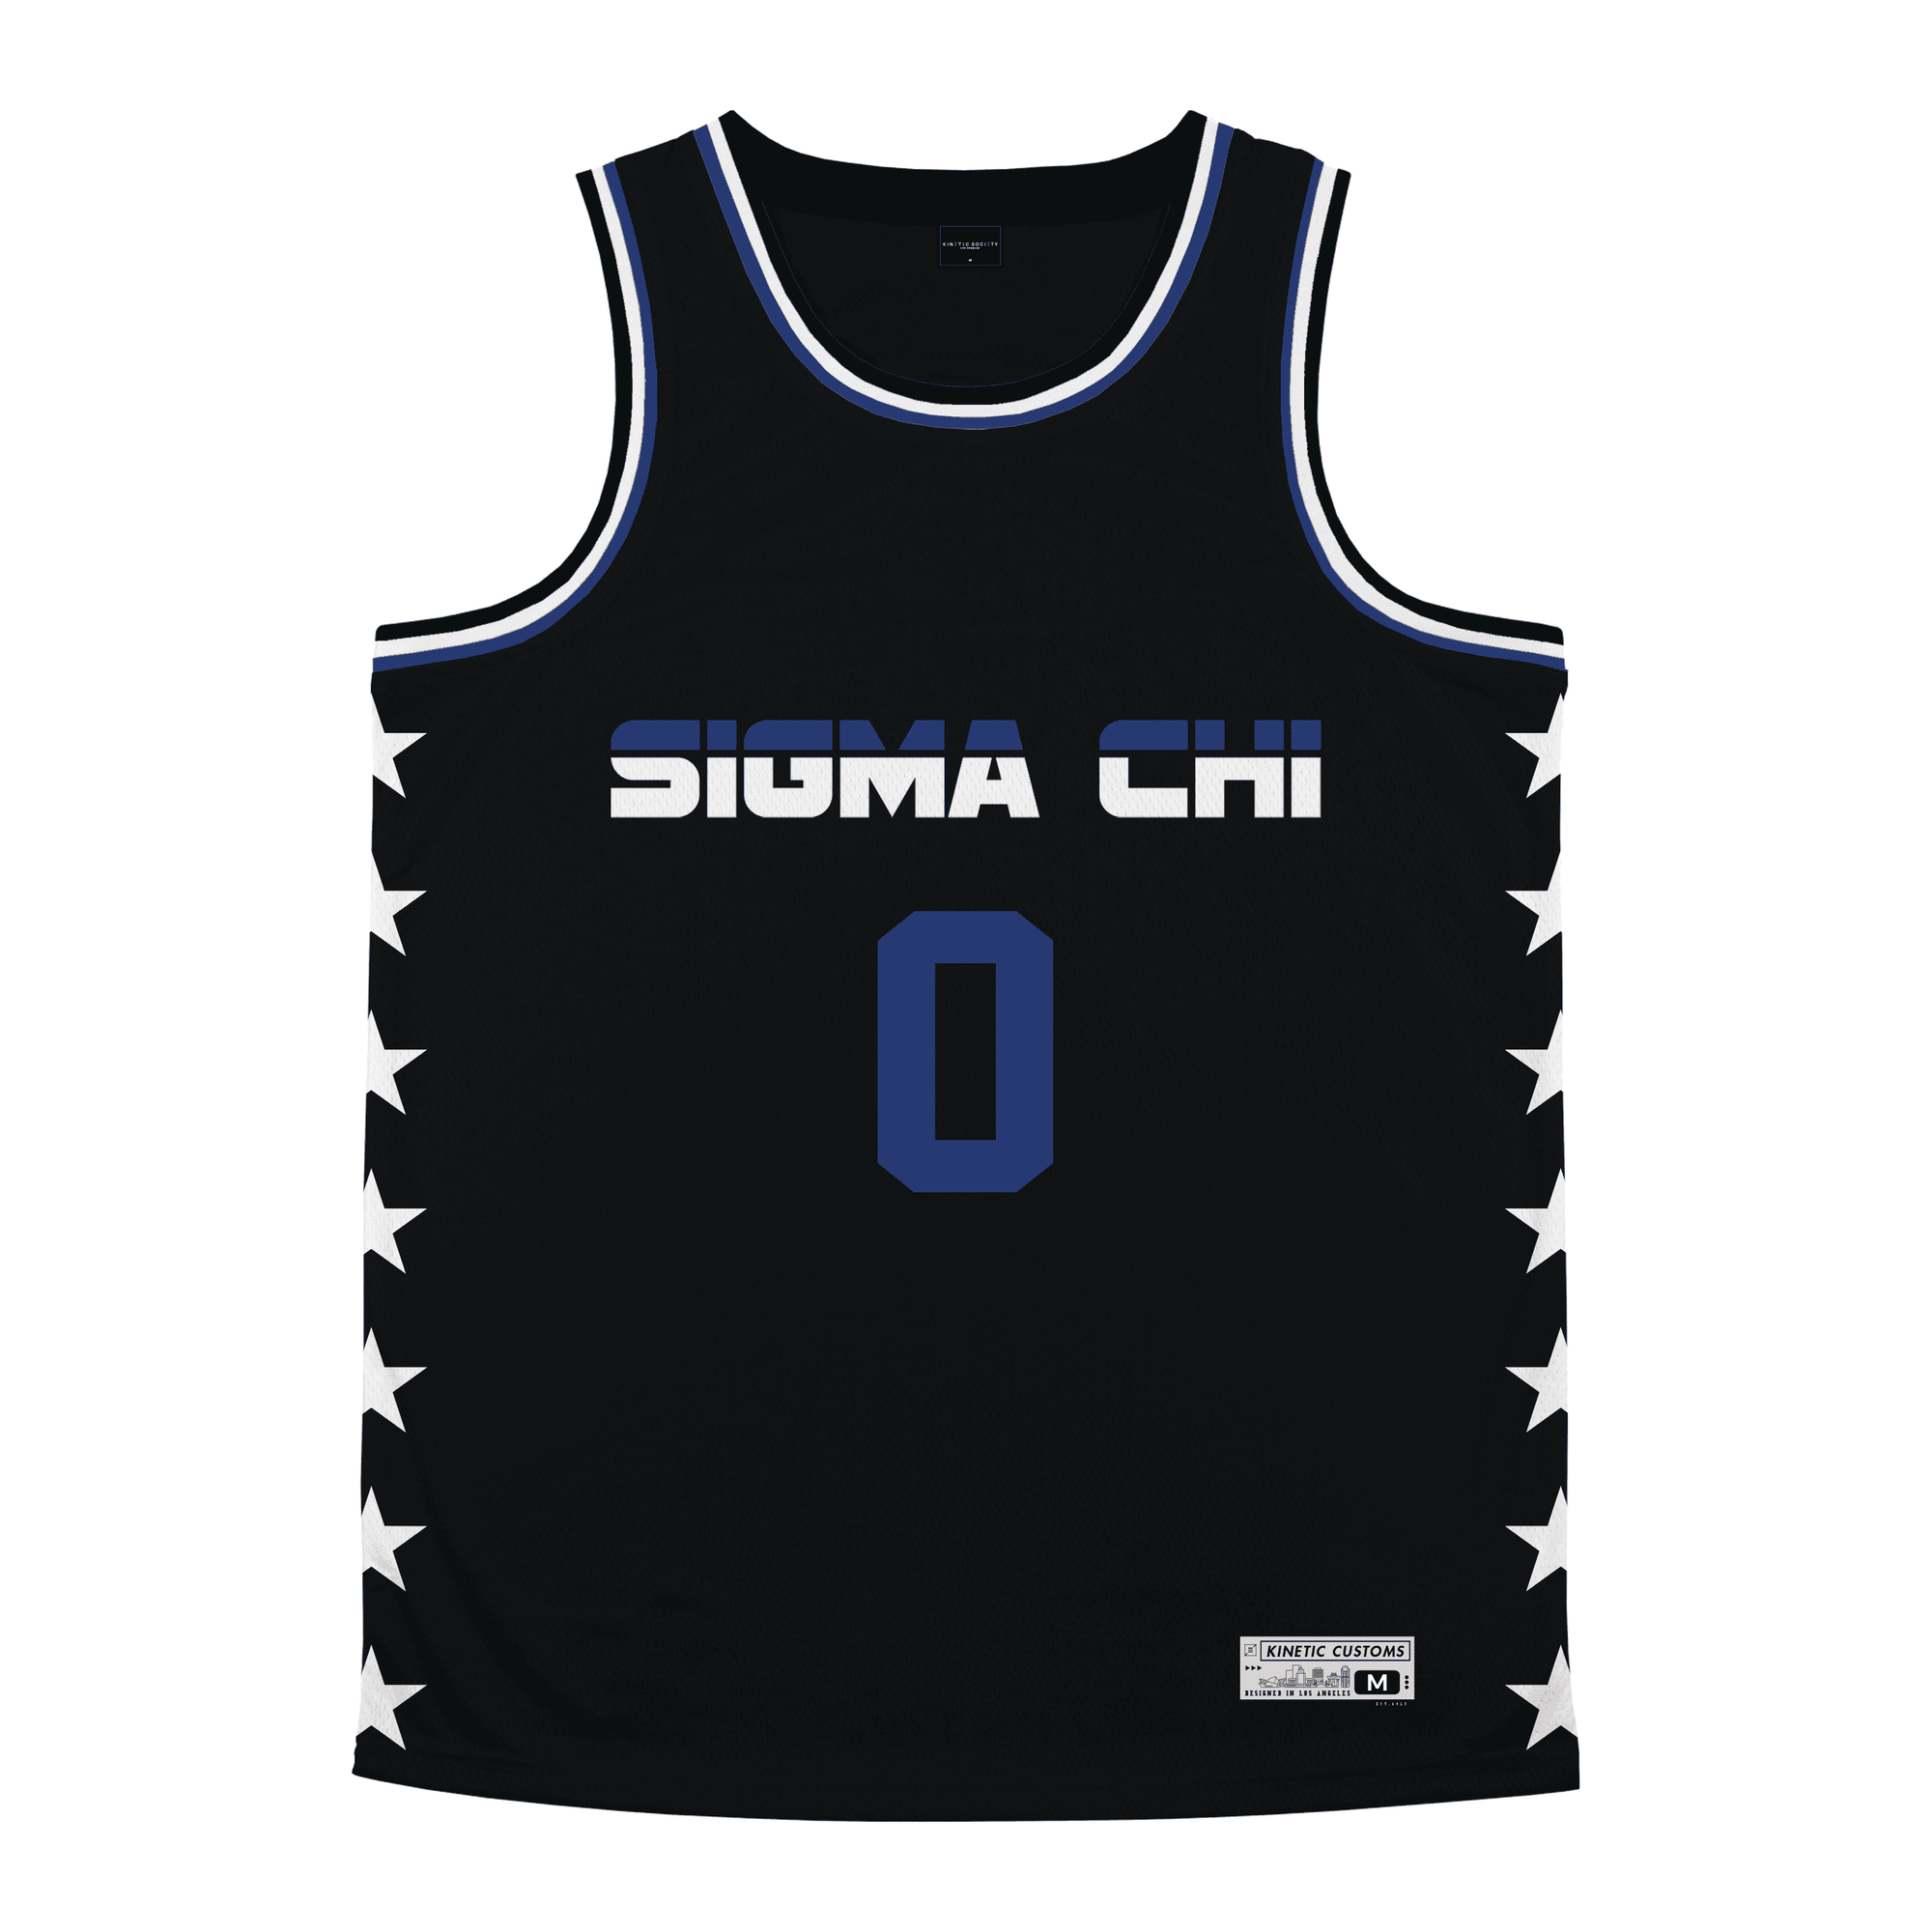 Sigma Chi - Black Star Night Mode Basketball Jersey